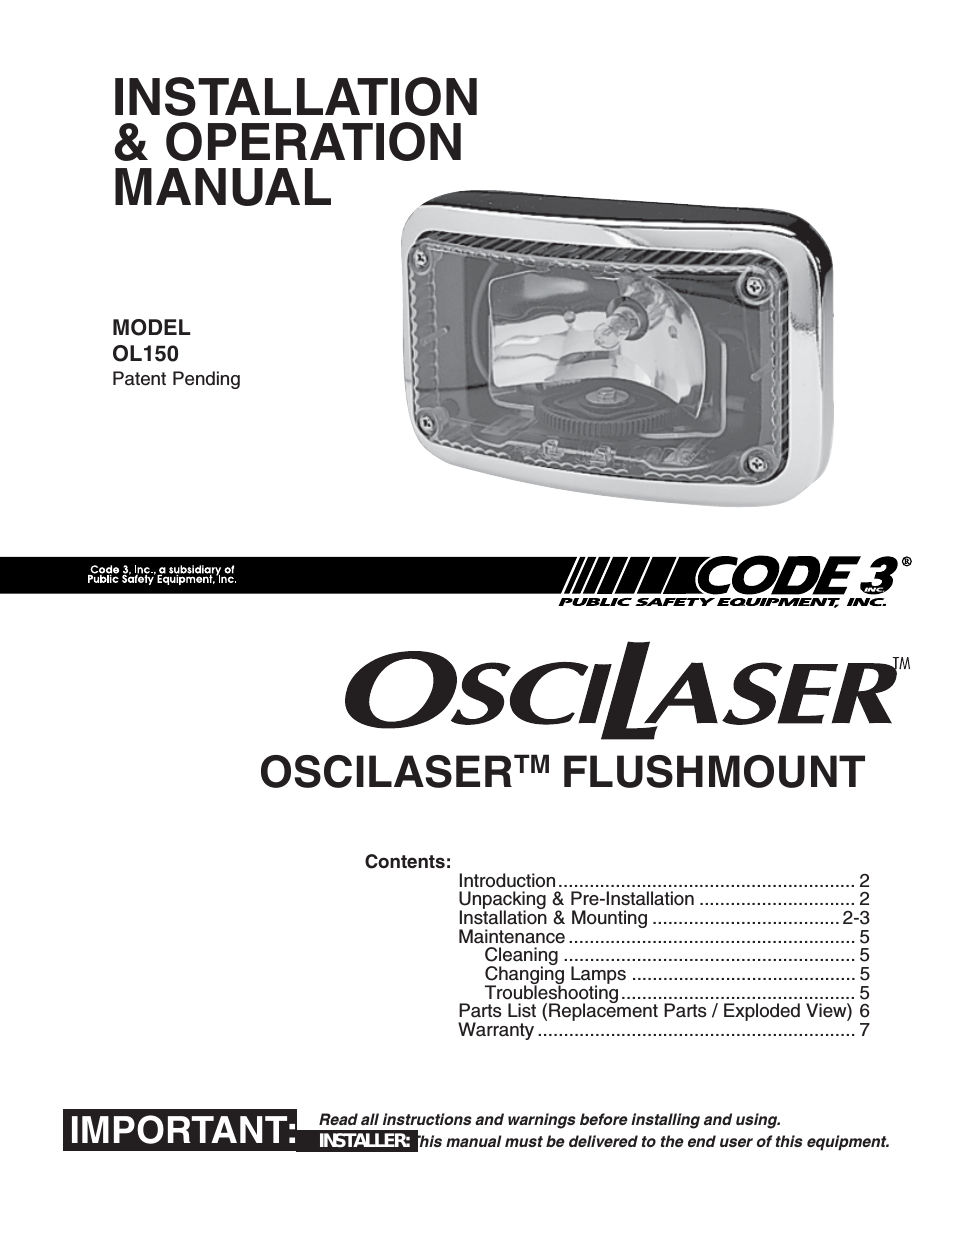 OsciLaser Flushmount